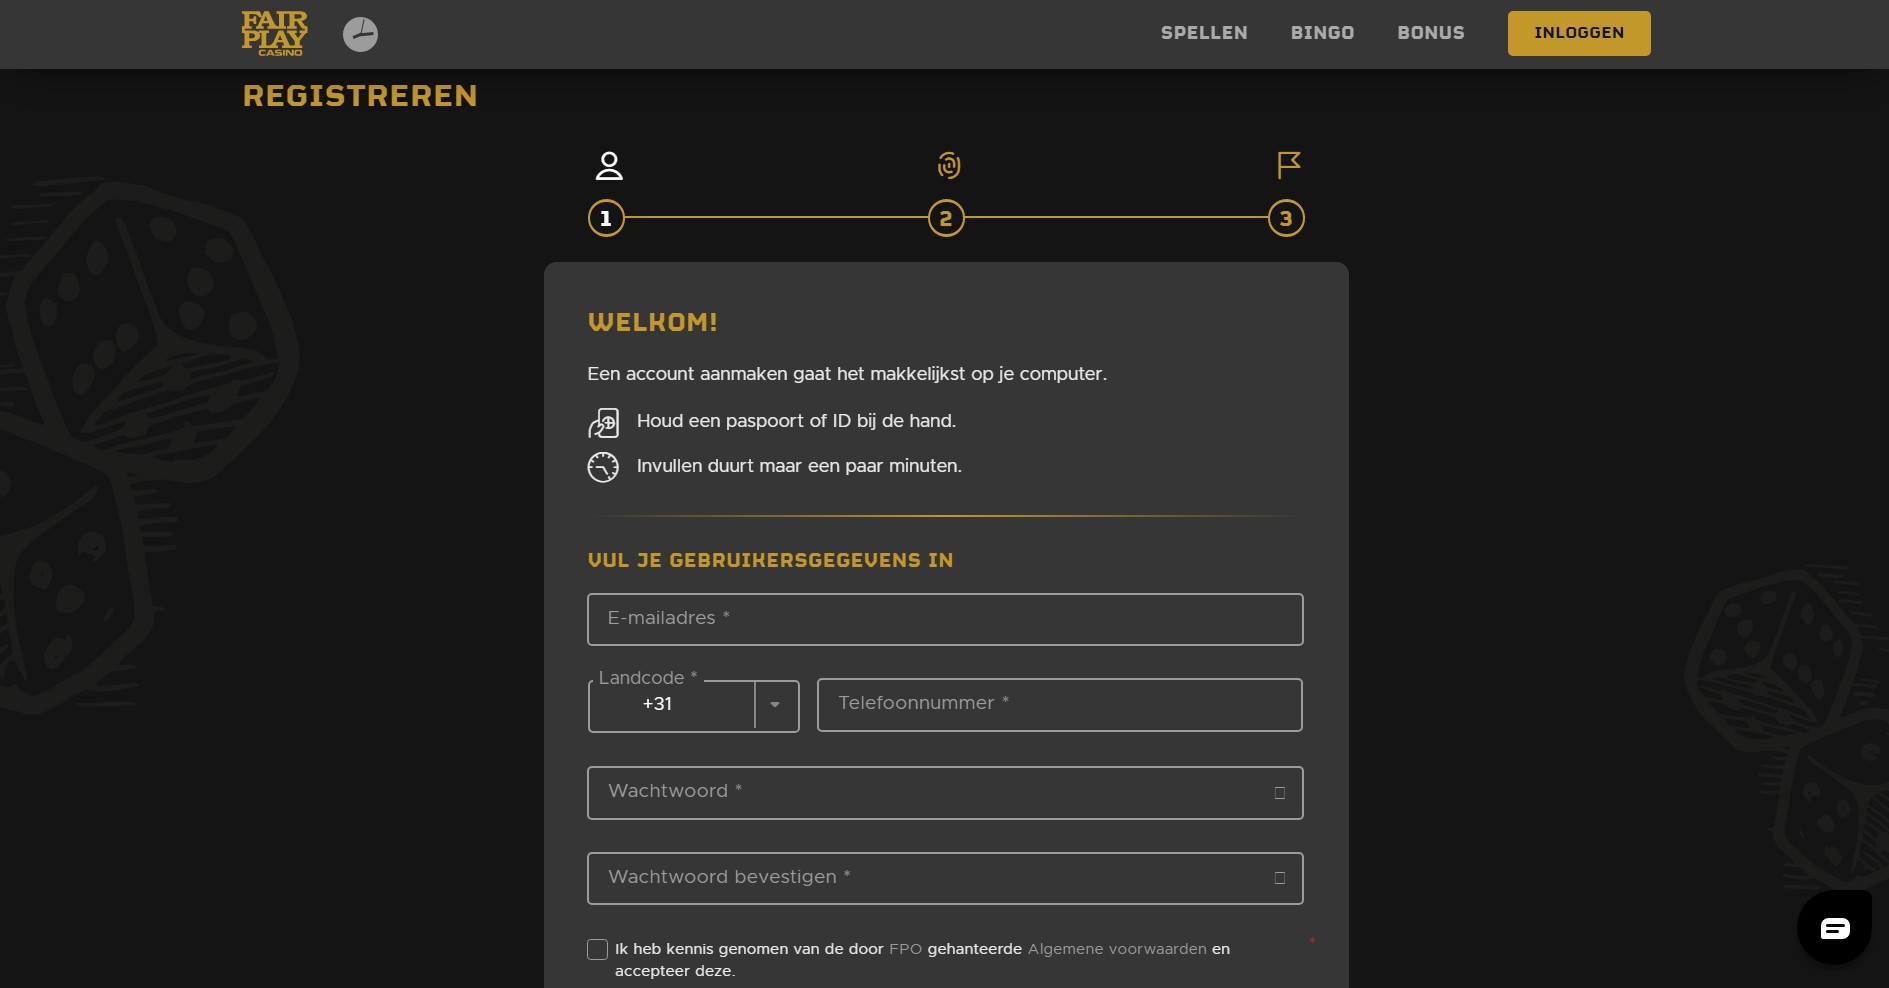 Registration Screenshot Fair Play Casino